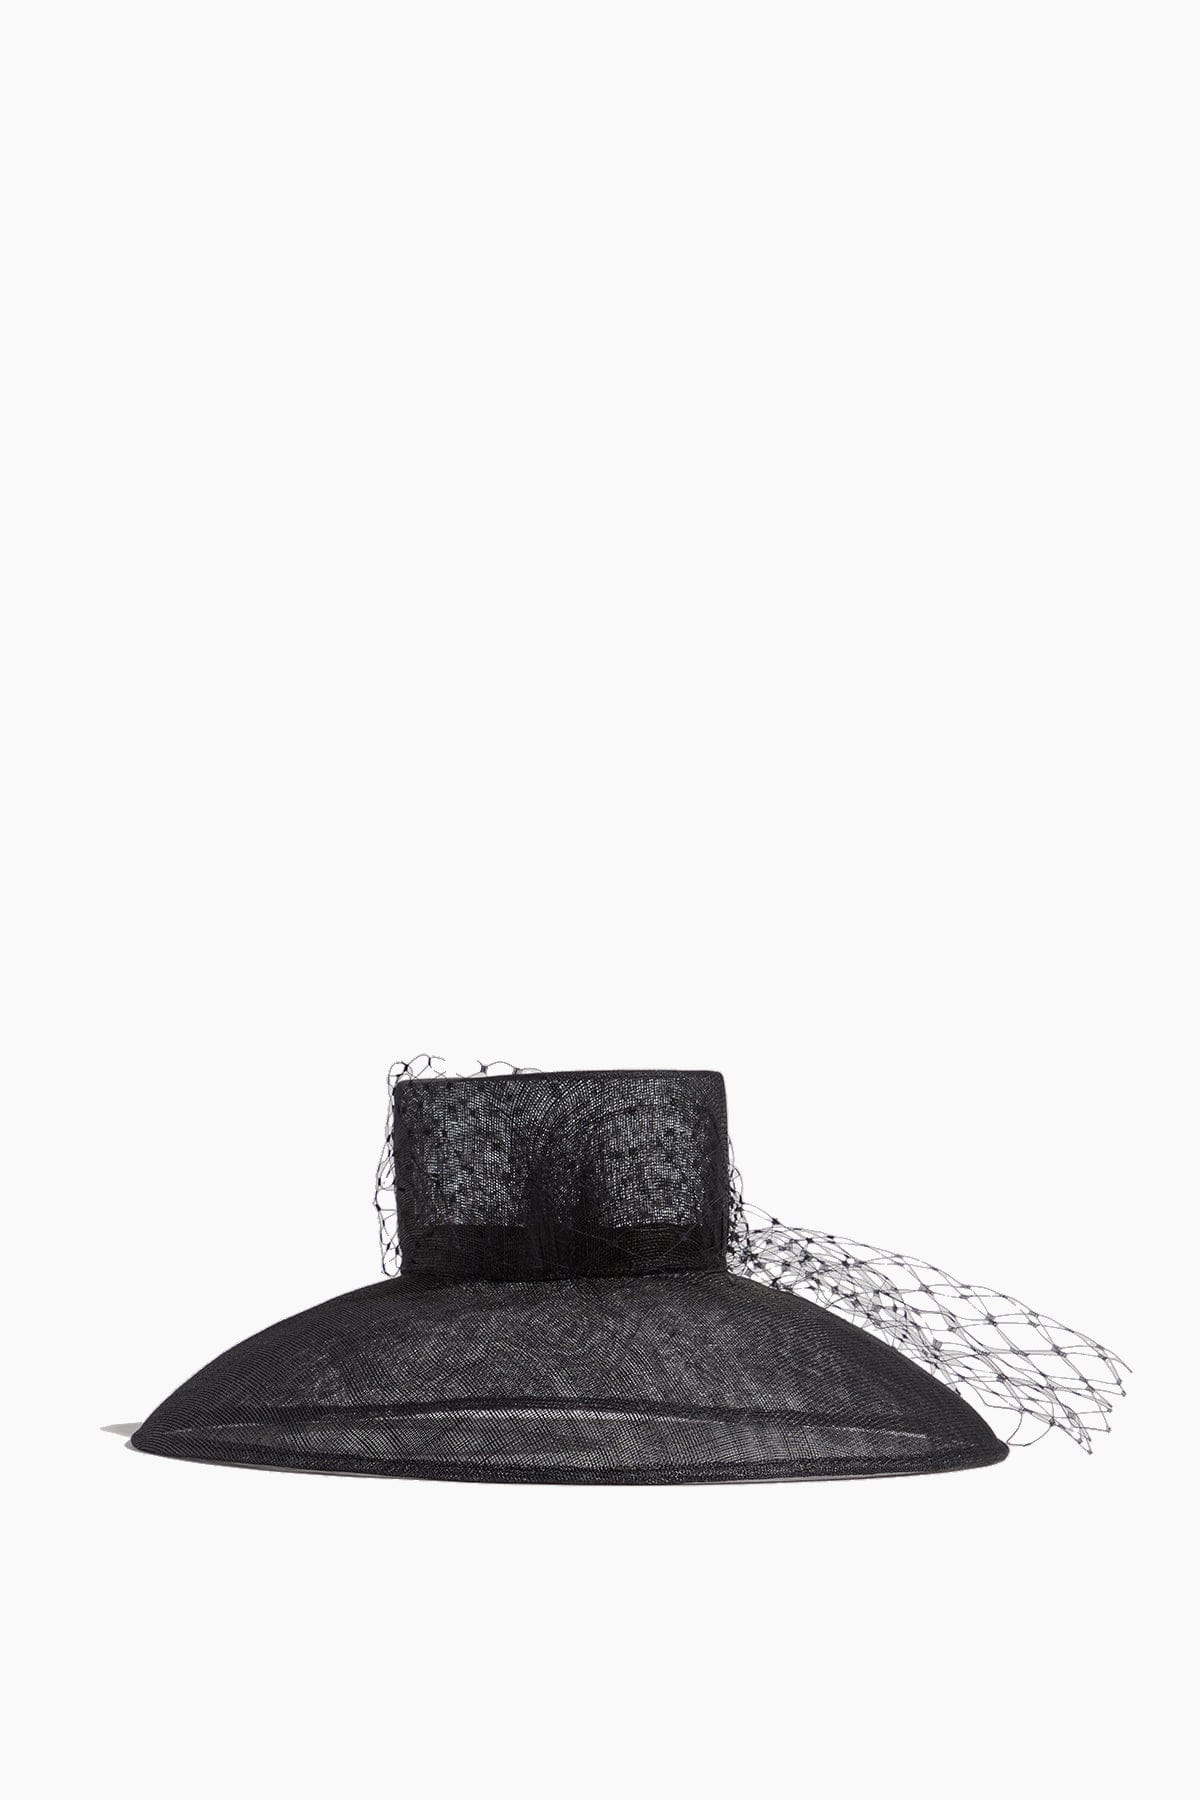 Gigi Burris Hats Joanne Hat in Black Gigi Burris Joanne Hat in Black